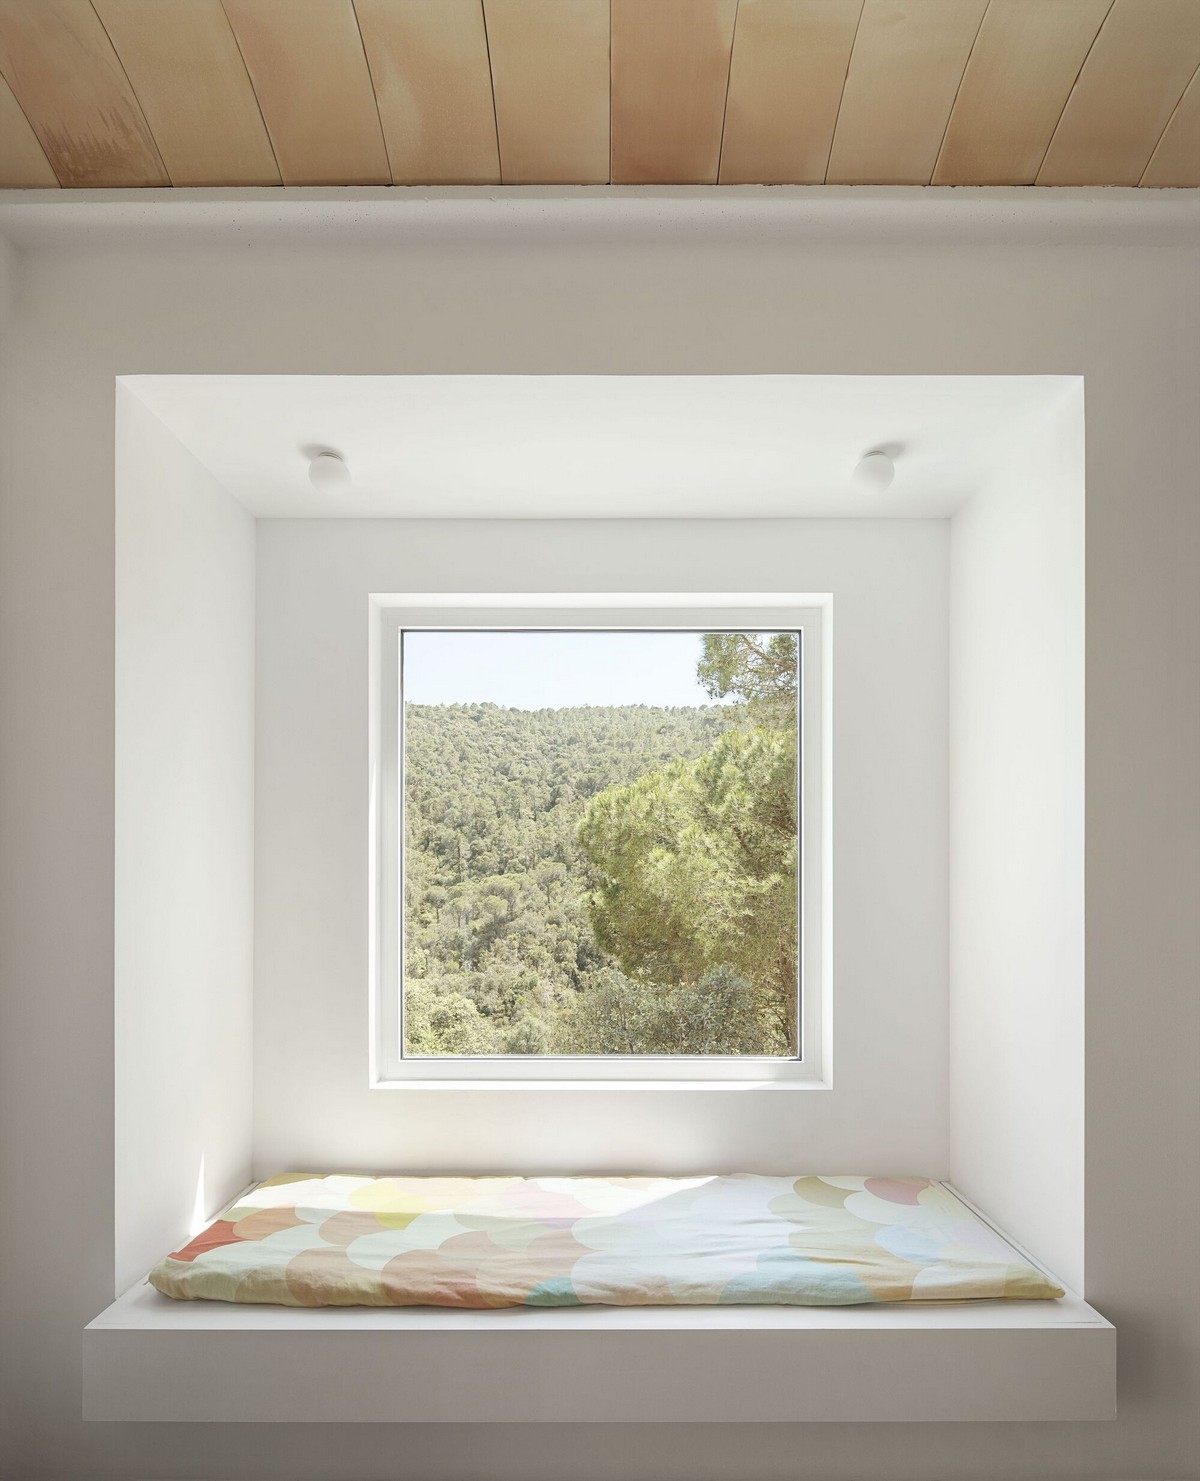 Дом на склоне холма с видом на лесистую долину в Каталонии